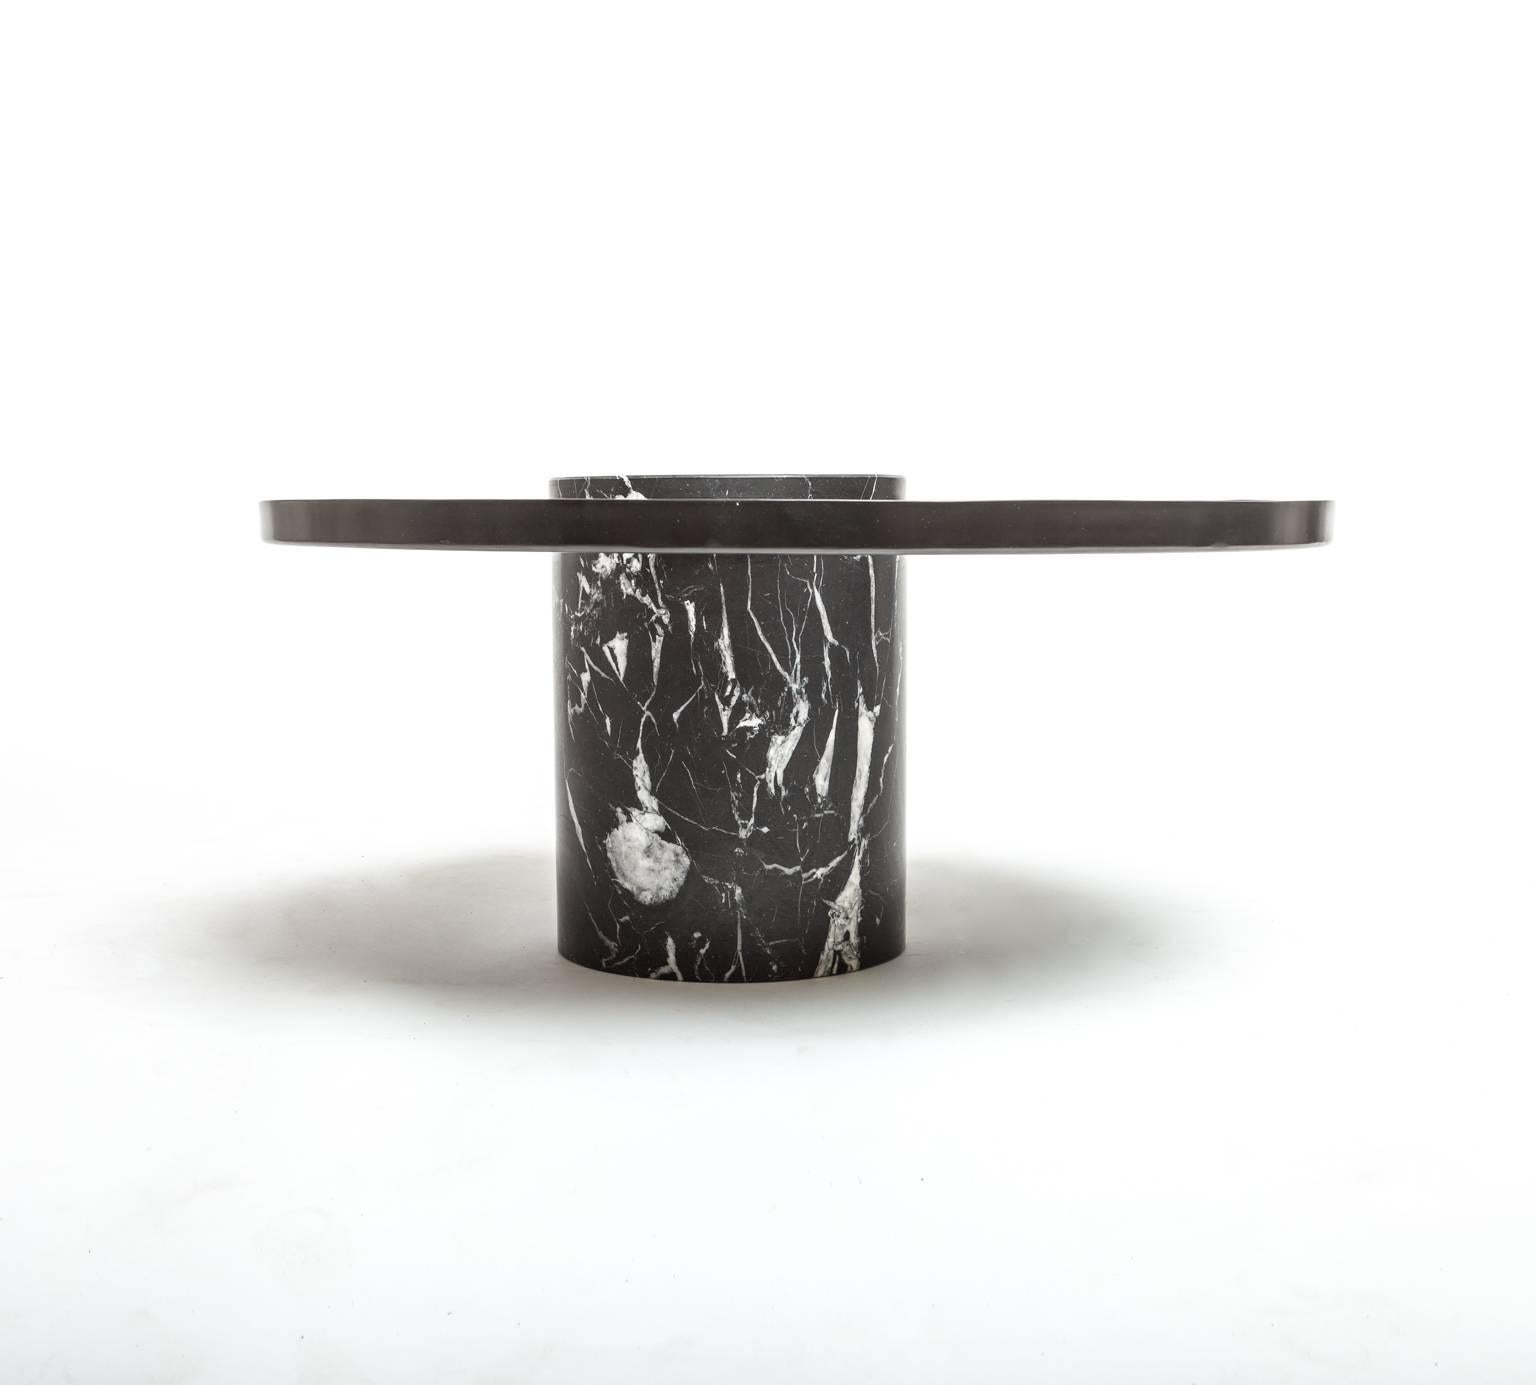 Low black marble table by Sebastian Herkner for La Chance.

Measures: 12 3/4” H x 27 3/4” D.